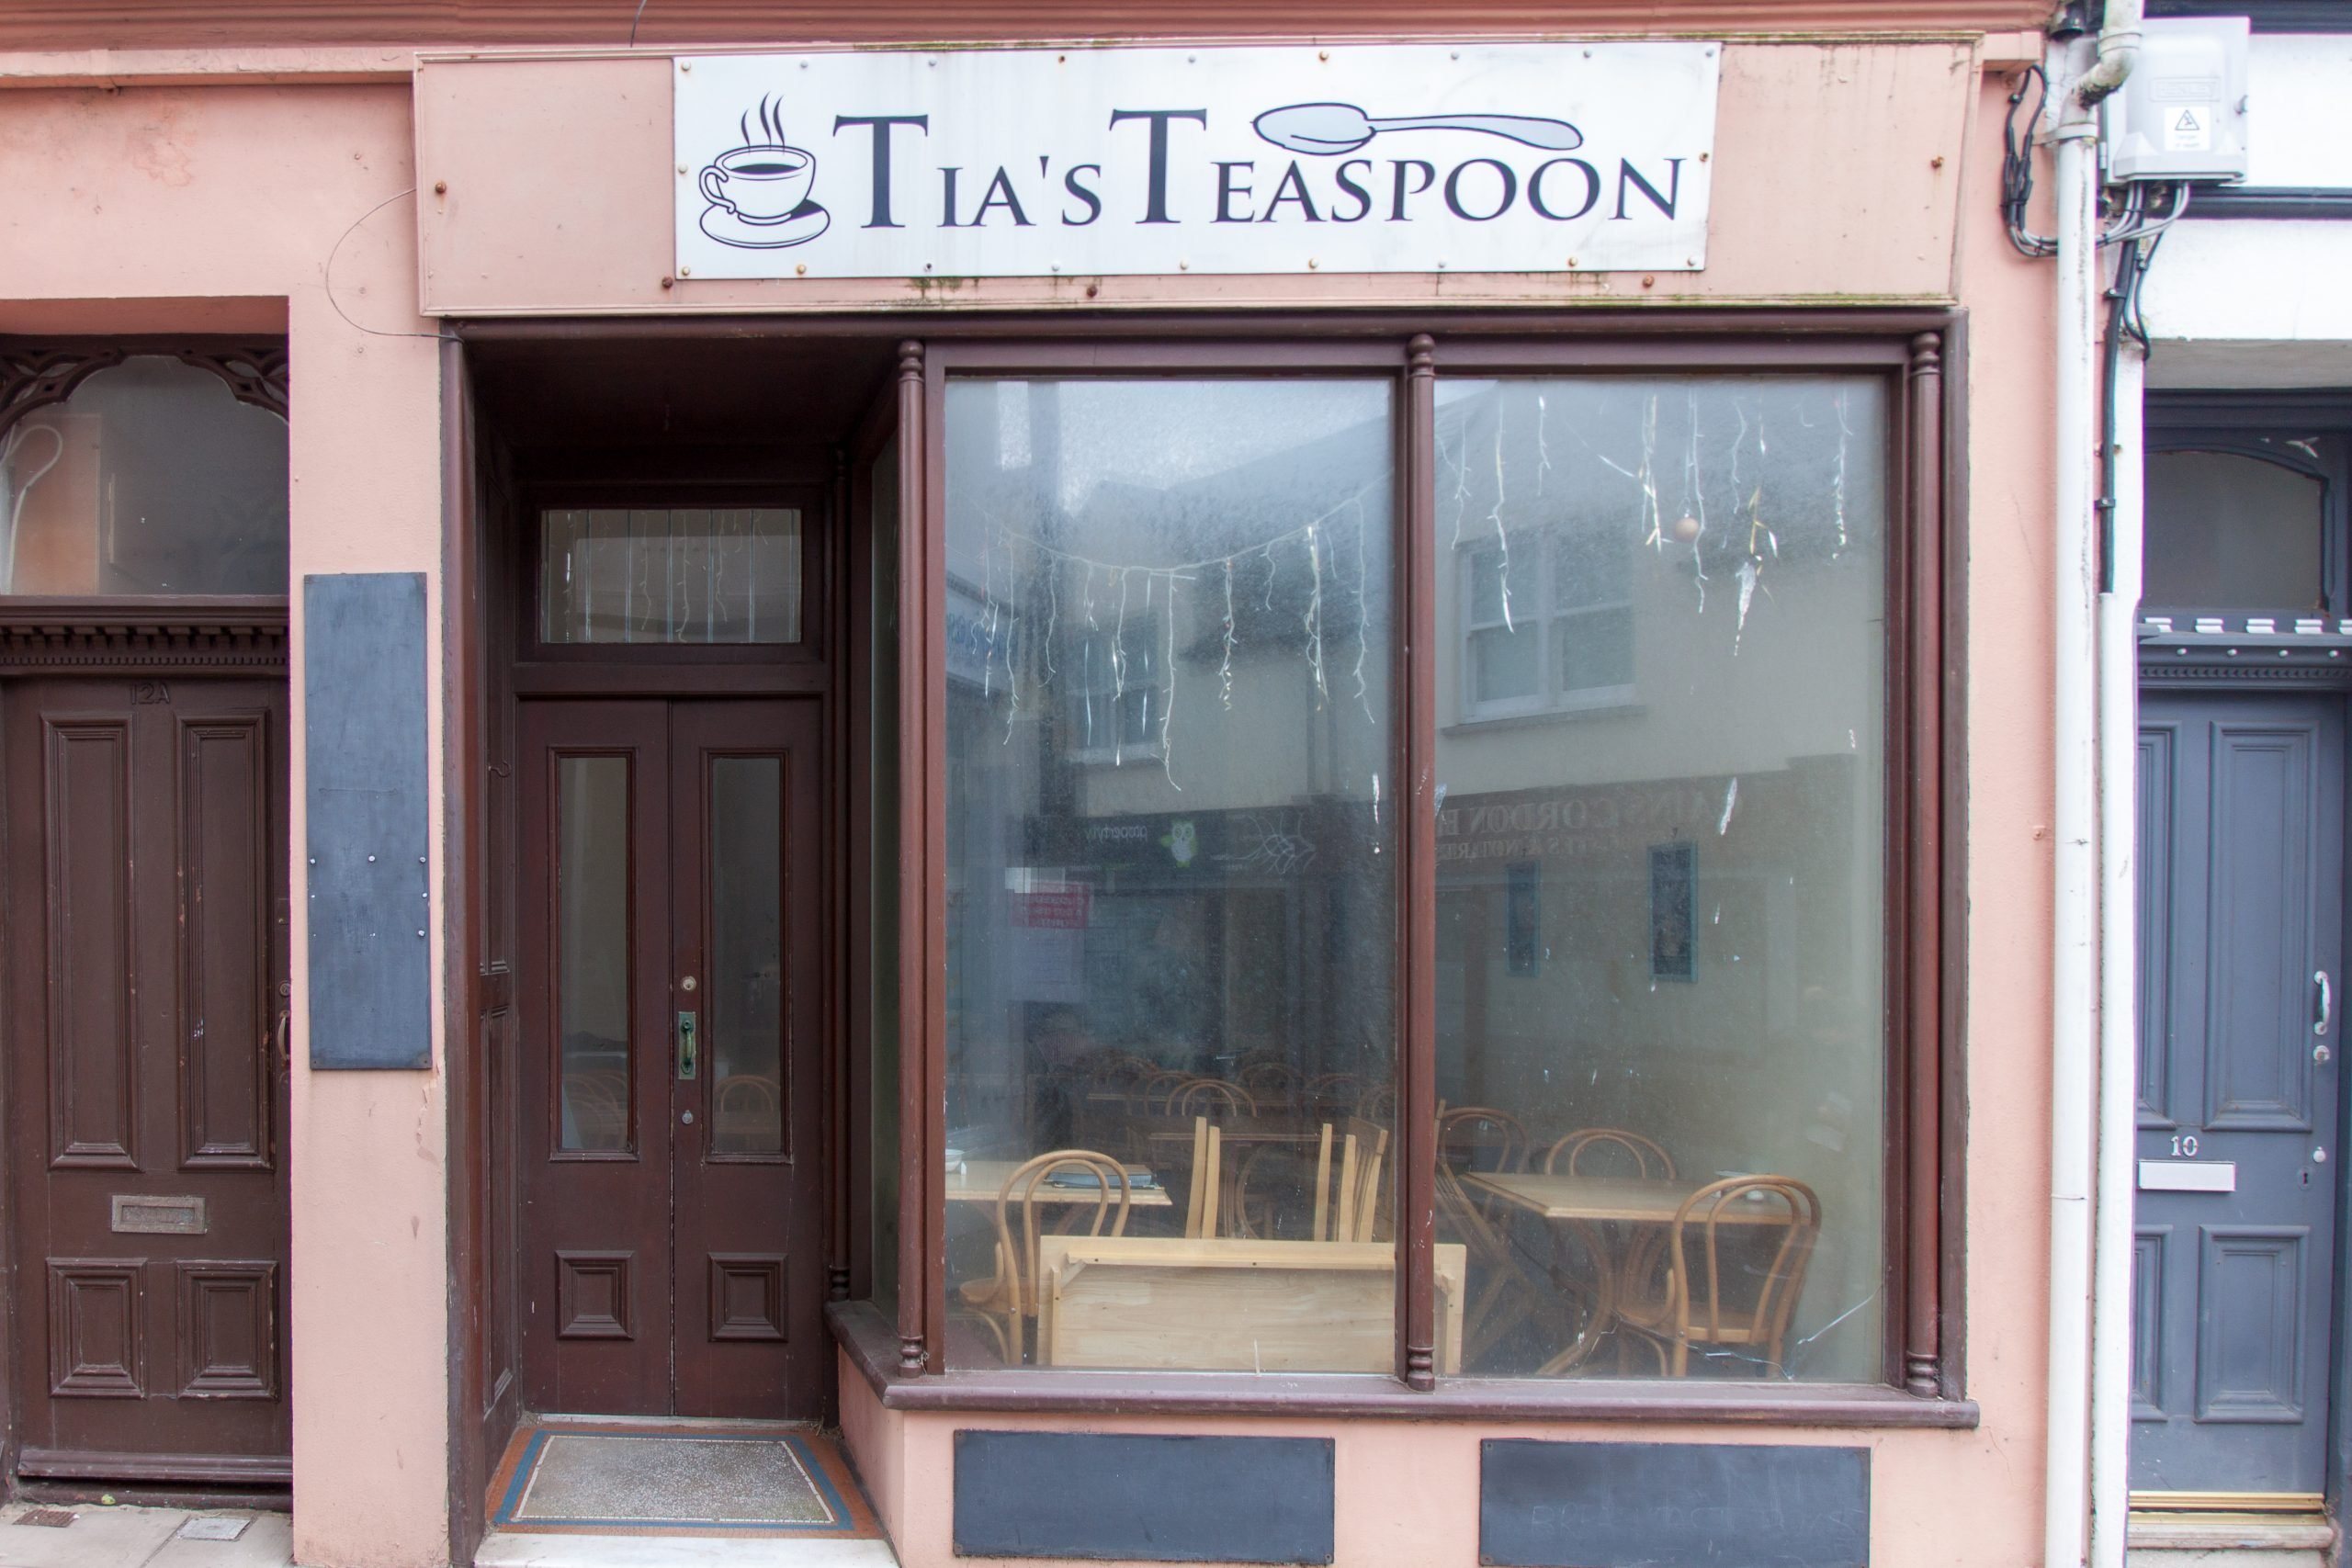 Former Tia's Teaspoon